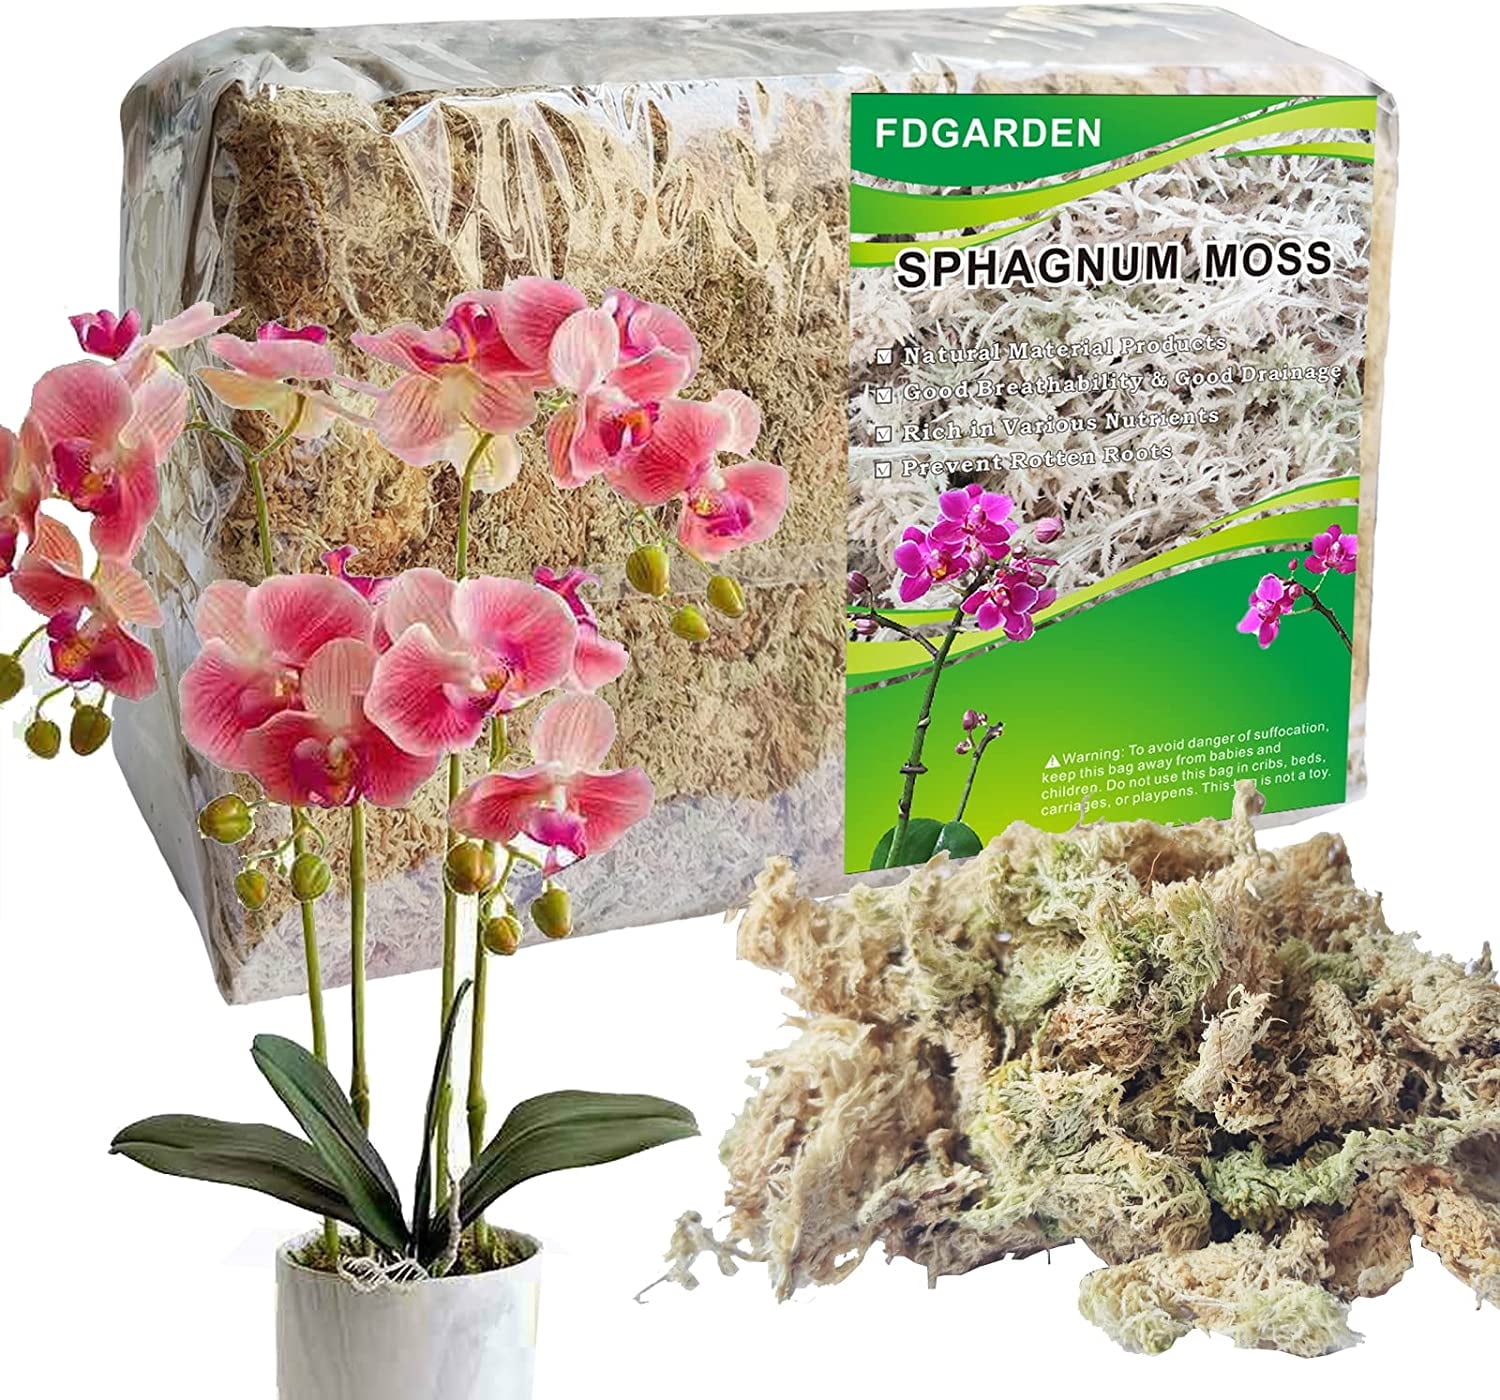 Exoticare Long-Strand Sphagnum Moss Enhanced with Spirulina